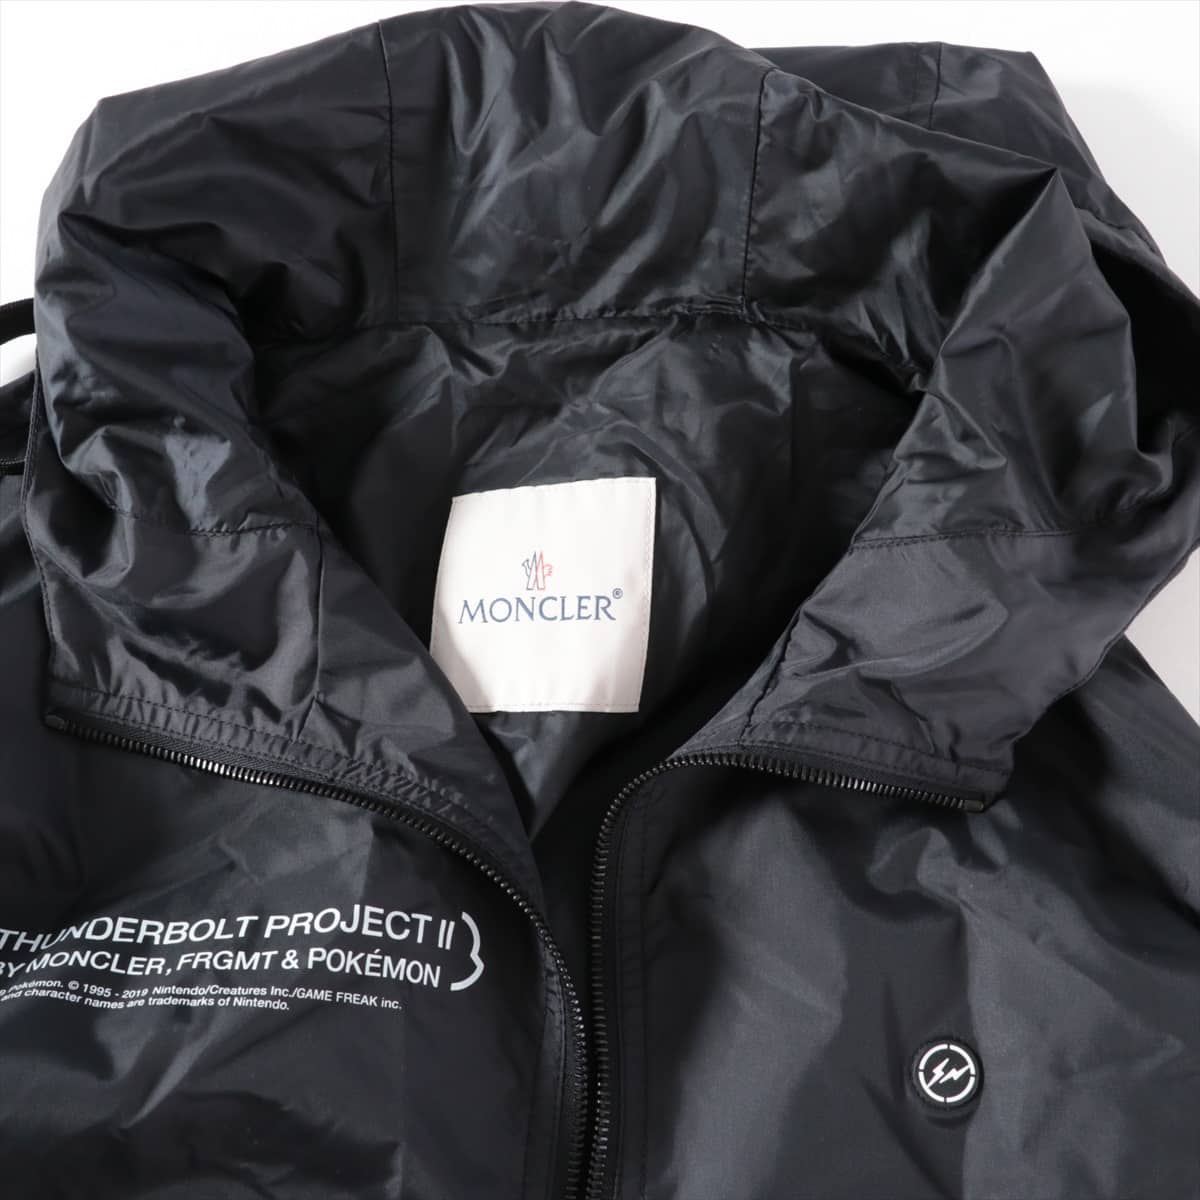 Moncler Genius Fragment HIKARU 20 years Nylon Nylon jacket 0 Men's Black  THUNDERBOLT PROJECT